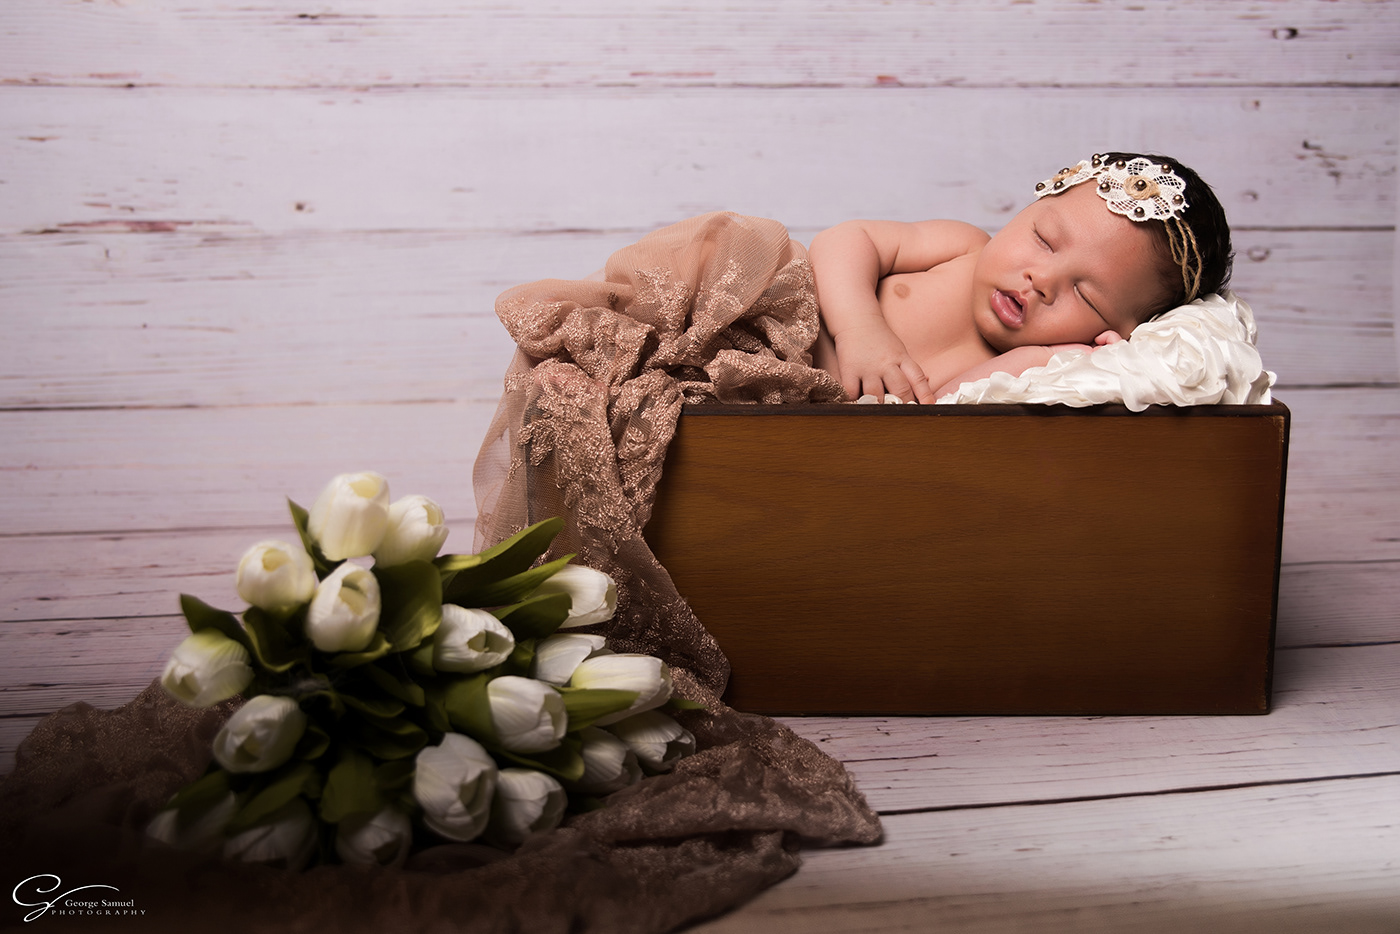 baby boy girl angel pure innocence beauty Photography  portrait newborn